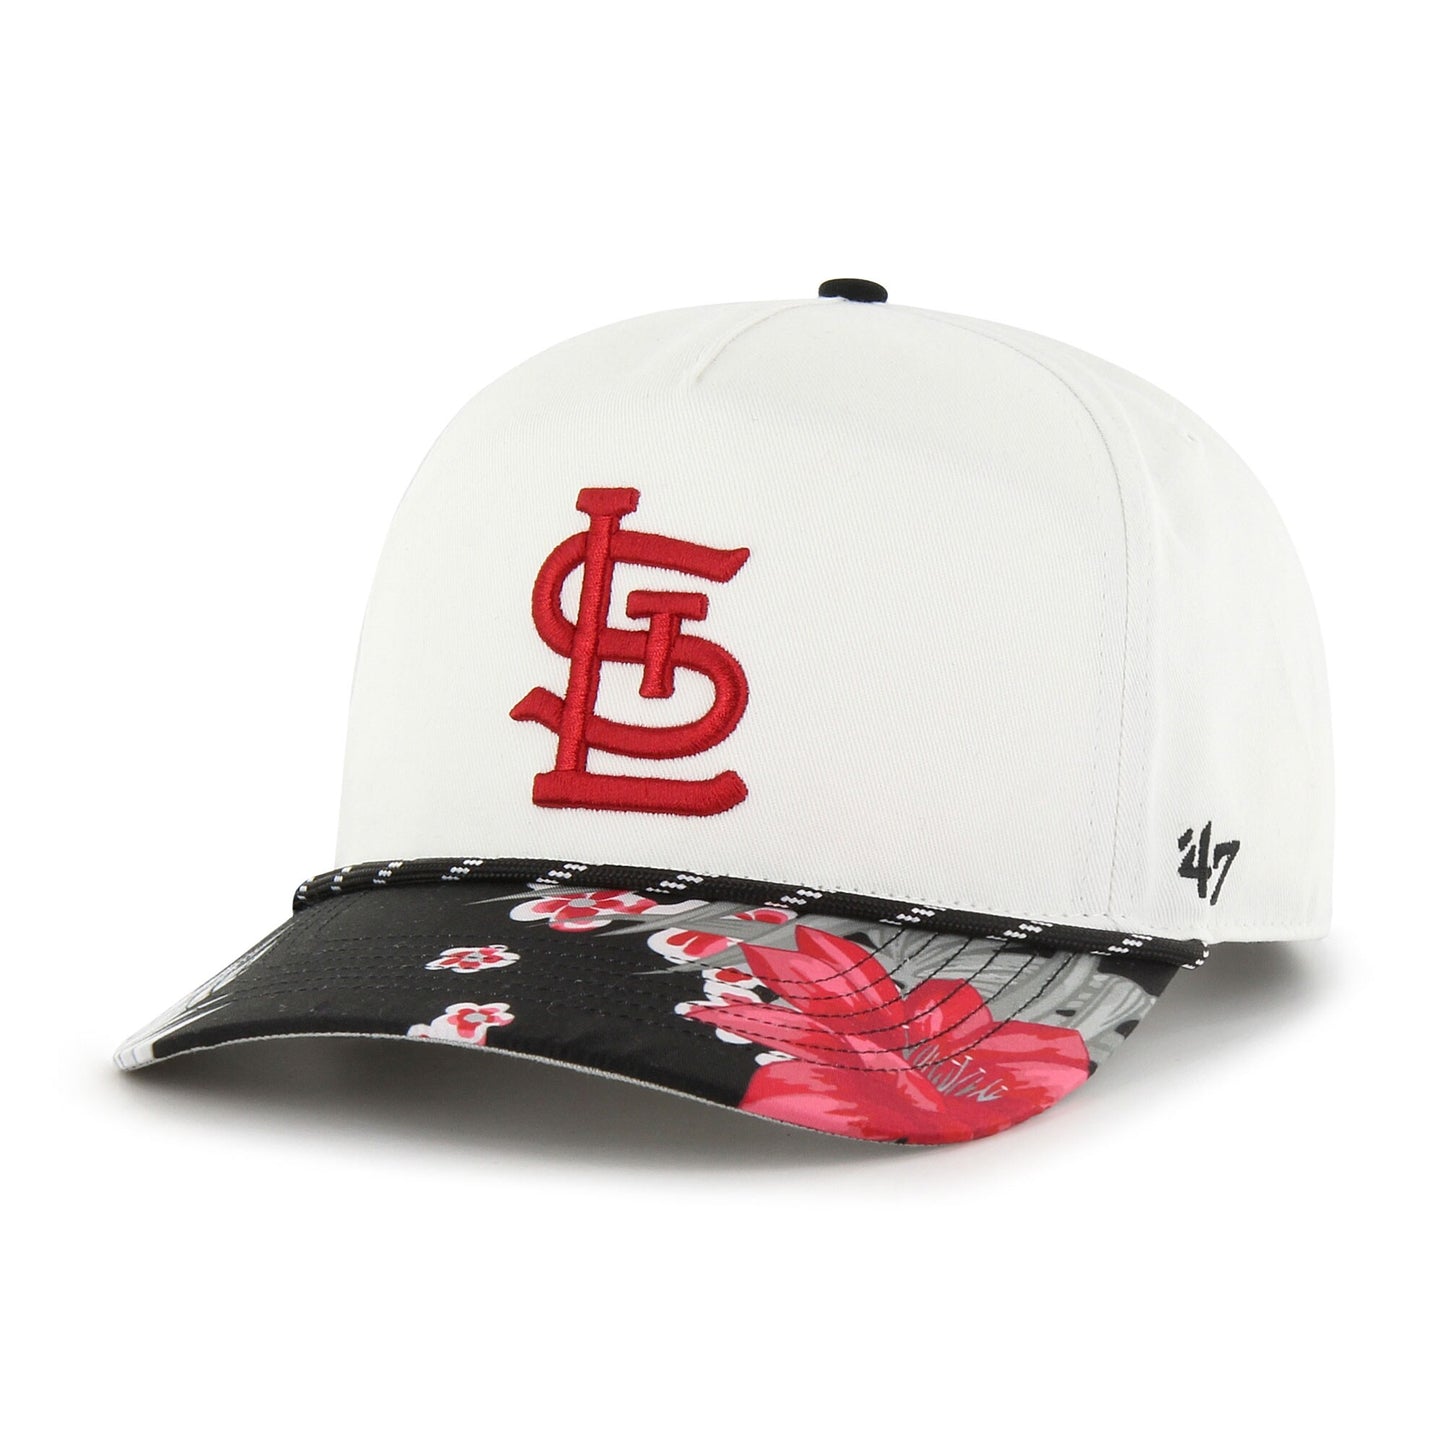 St. Louis Cardinals '47 Dark Tropic Hitch Snapback Hat - White